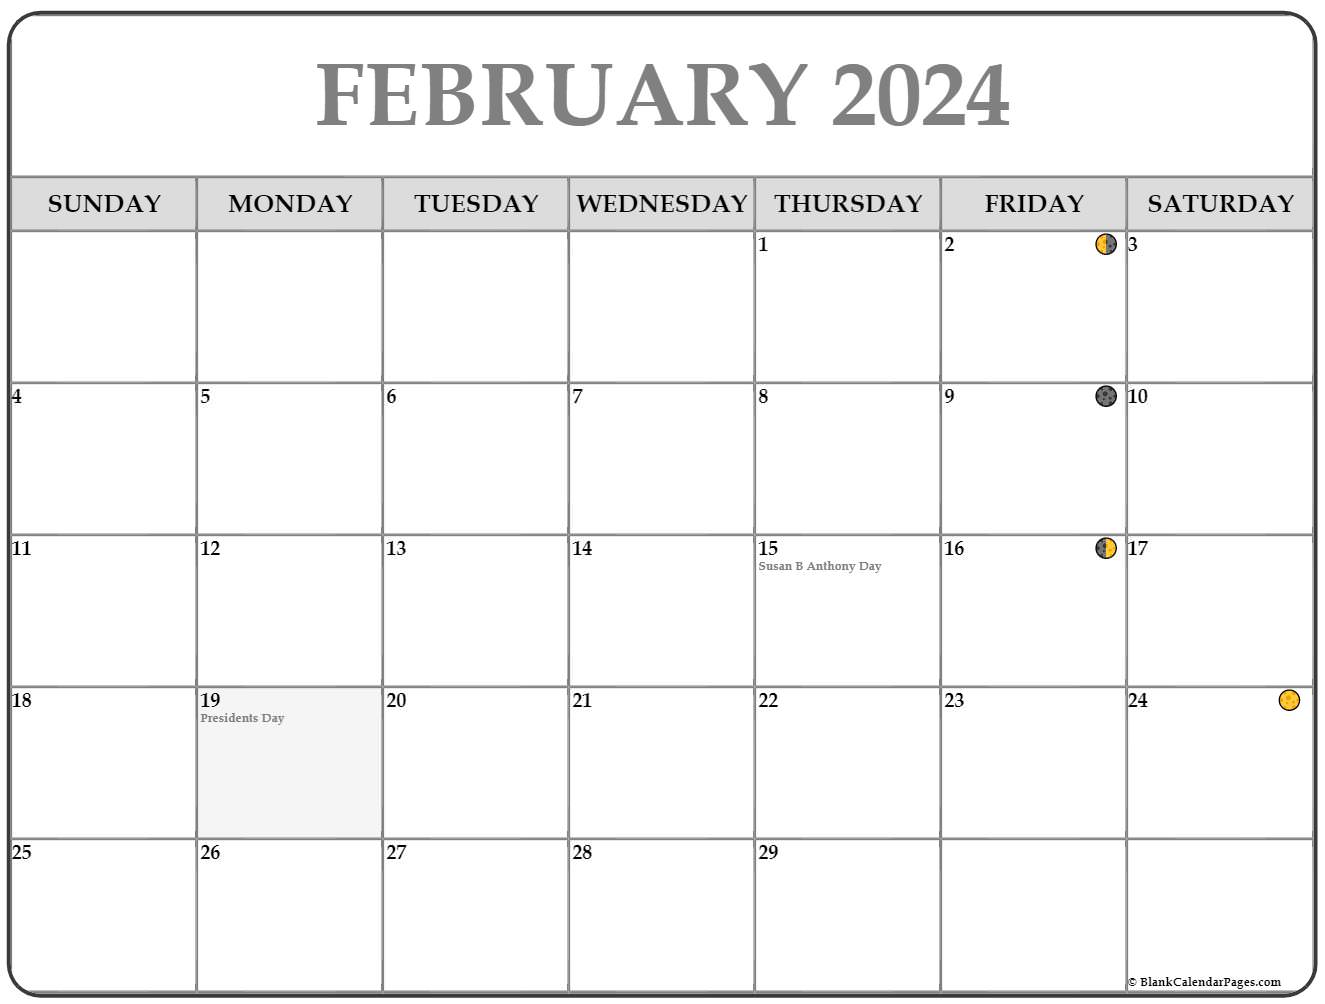 February 2022 Lunar Calendar Moon Phase Calendar